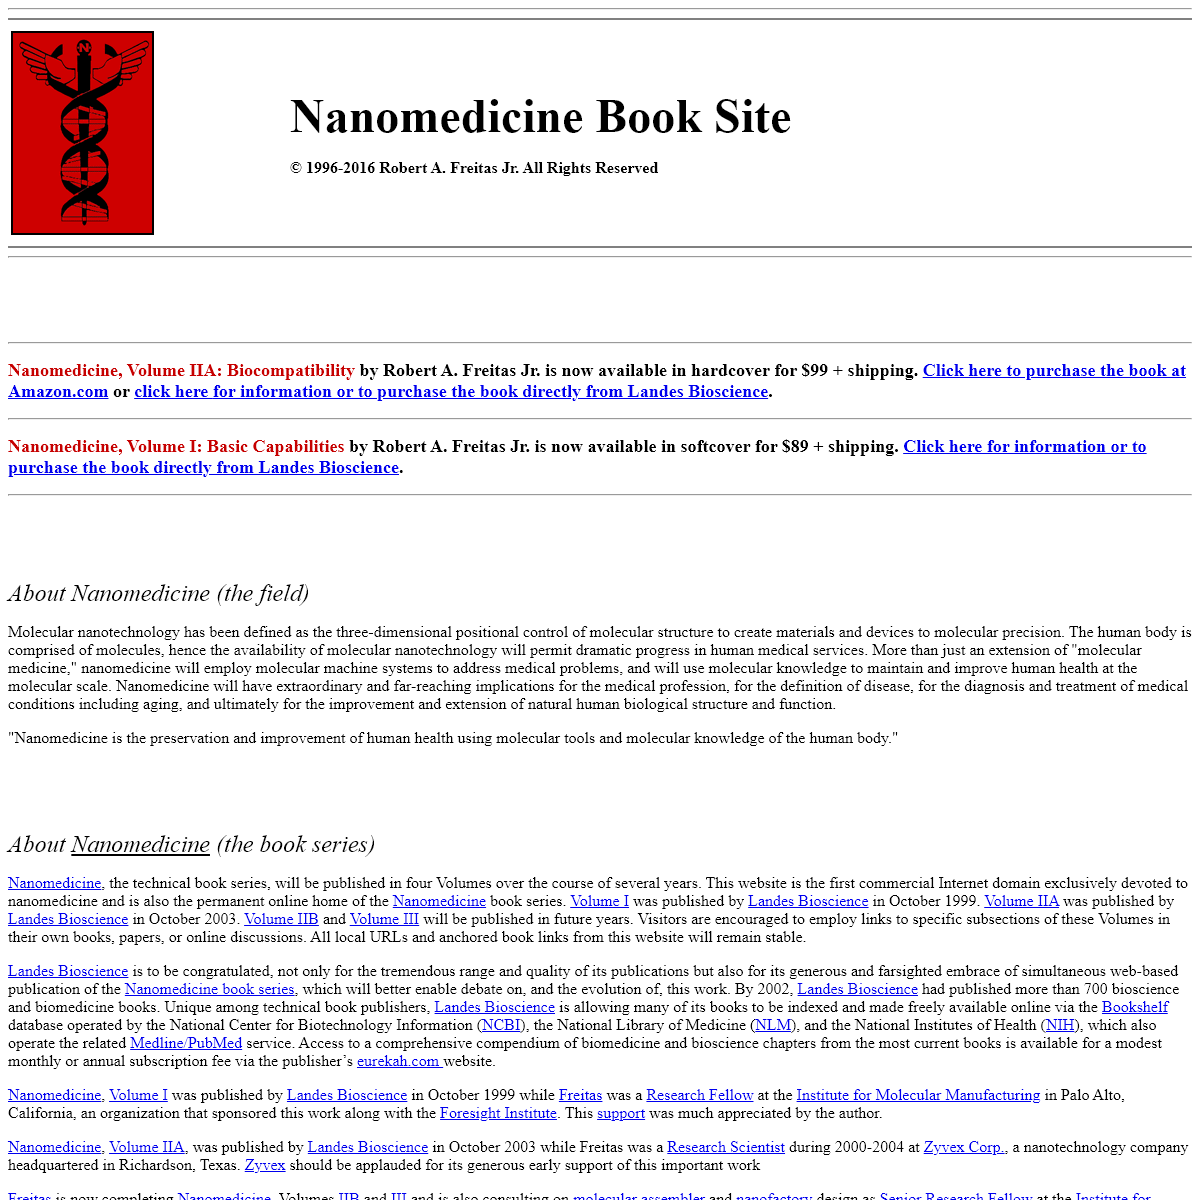 A complete backup of nanomedicine.com